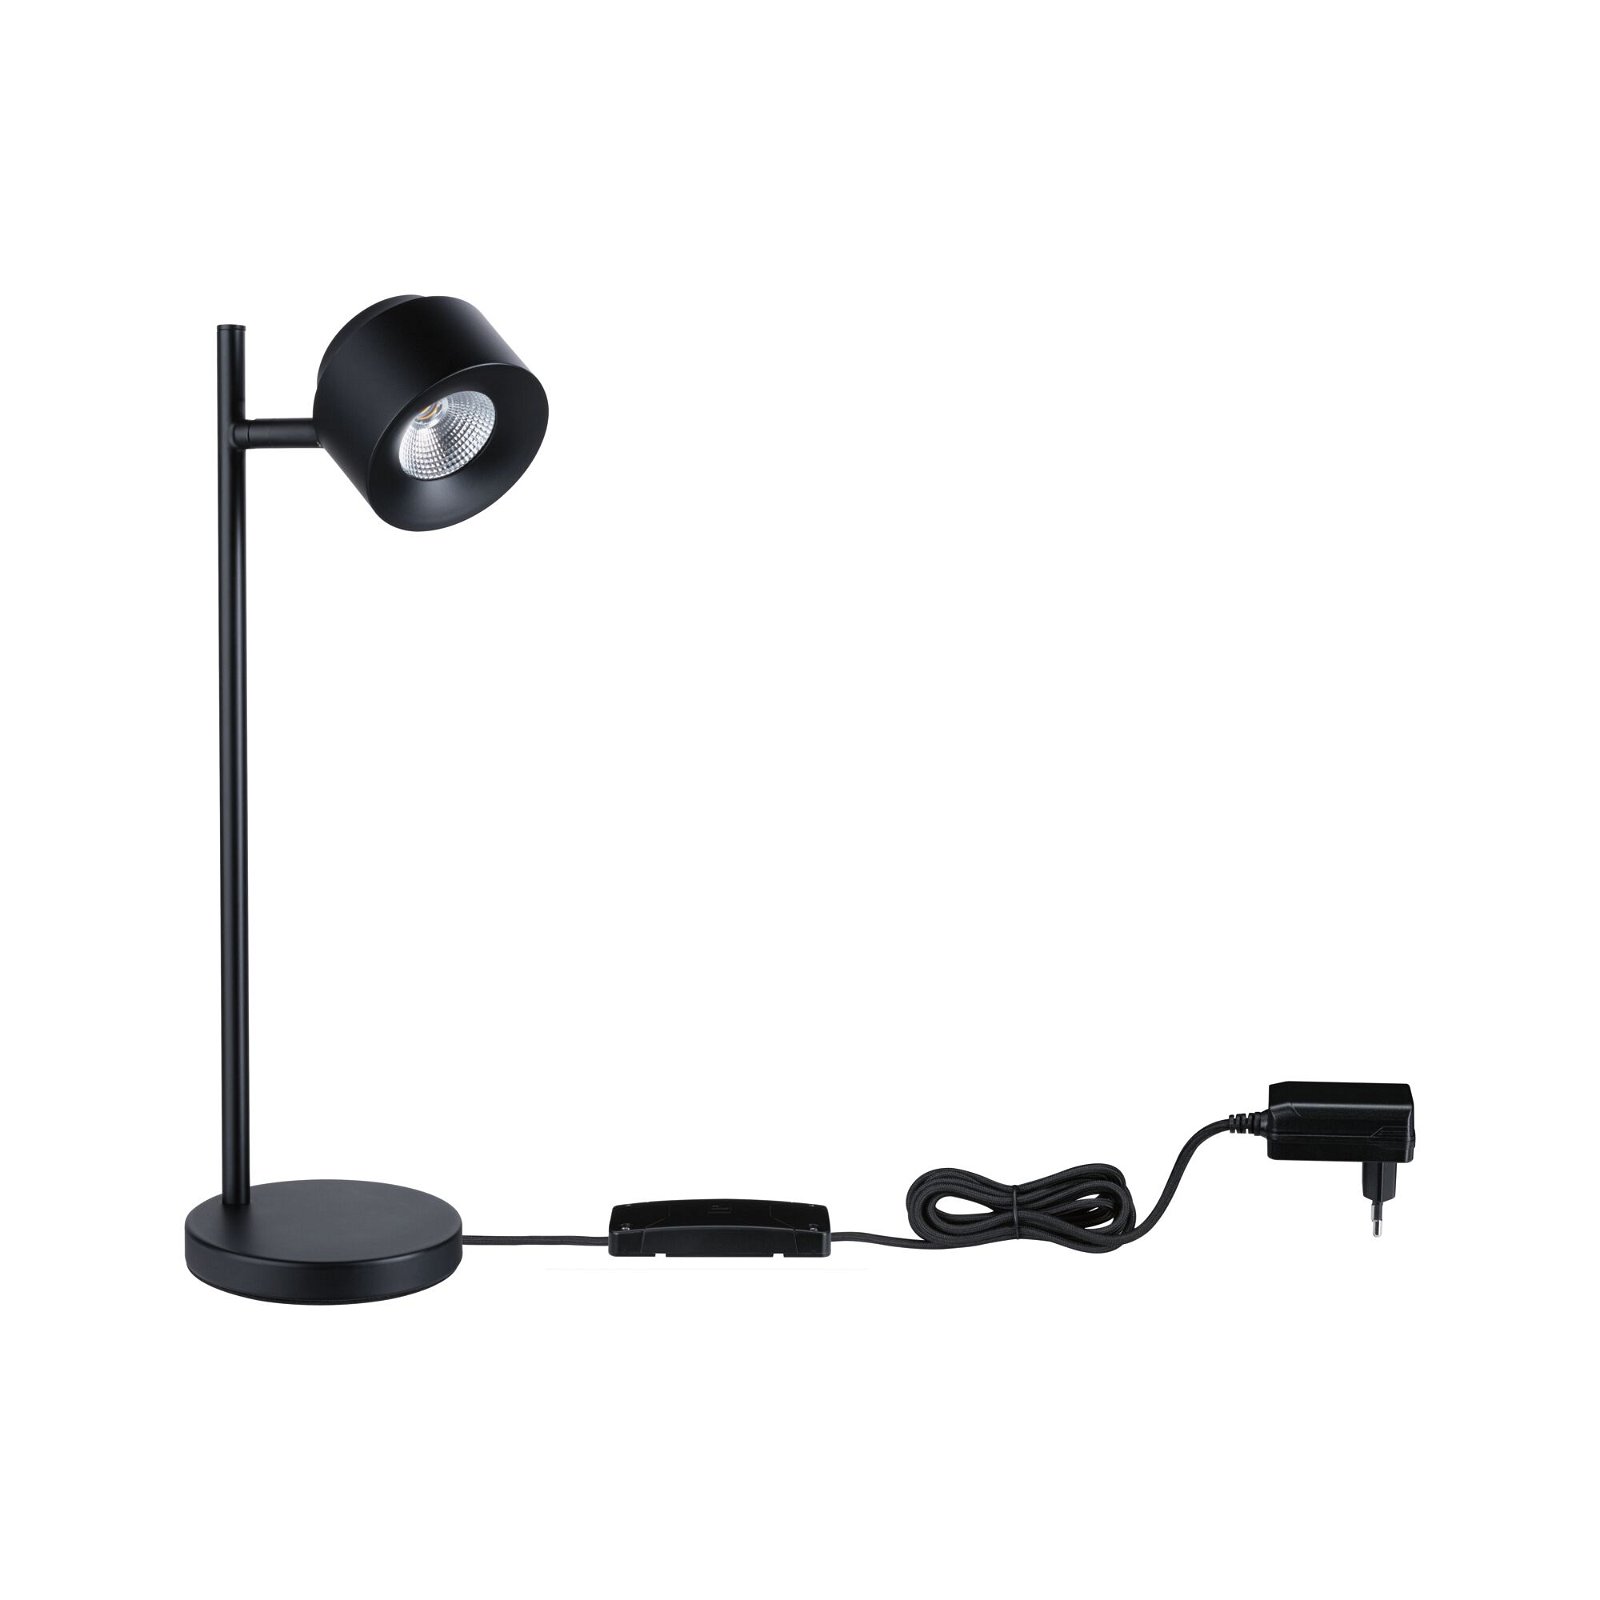 LED Table luminaire Smart Home Zigbee 3.0 Puric Pane 2700K 400lm 4,5W Black